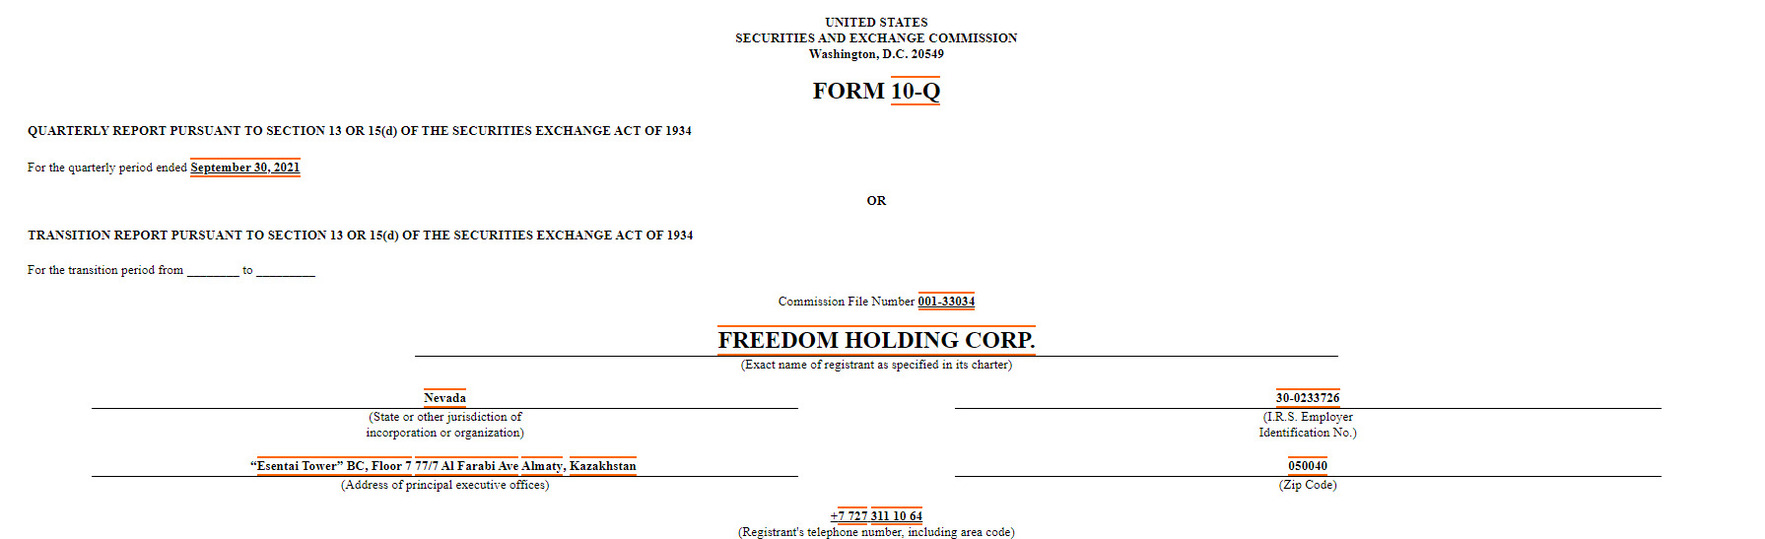 Freedom Holding Corp.: вся правда о доходах